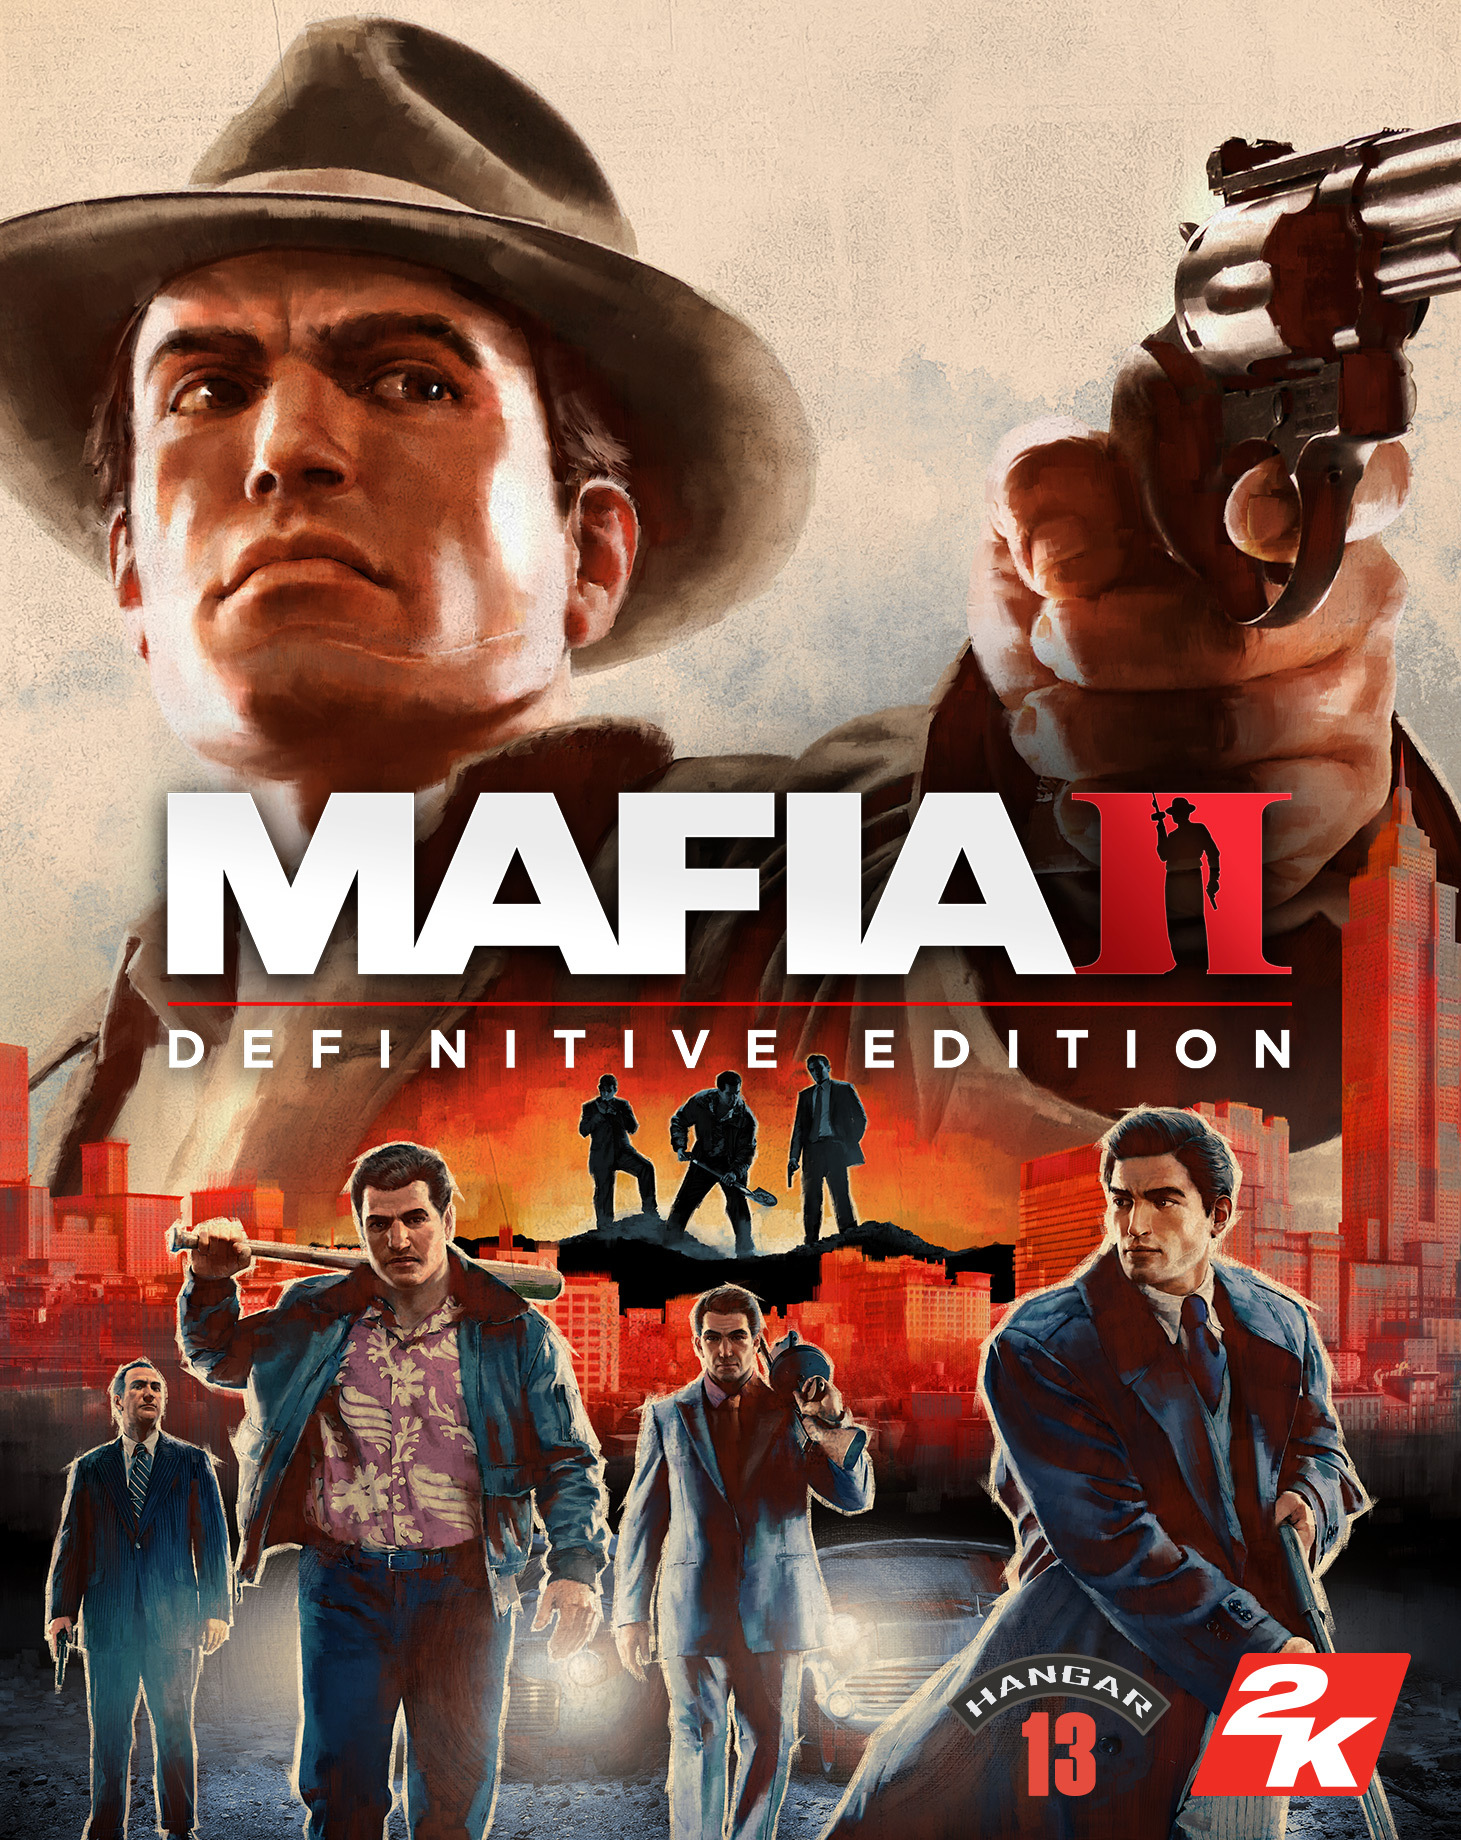 Mafia Trilogy (Import) ( Pre-Owned )